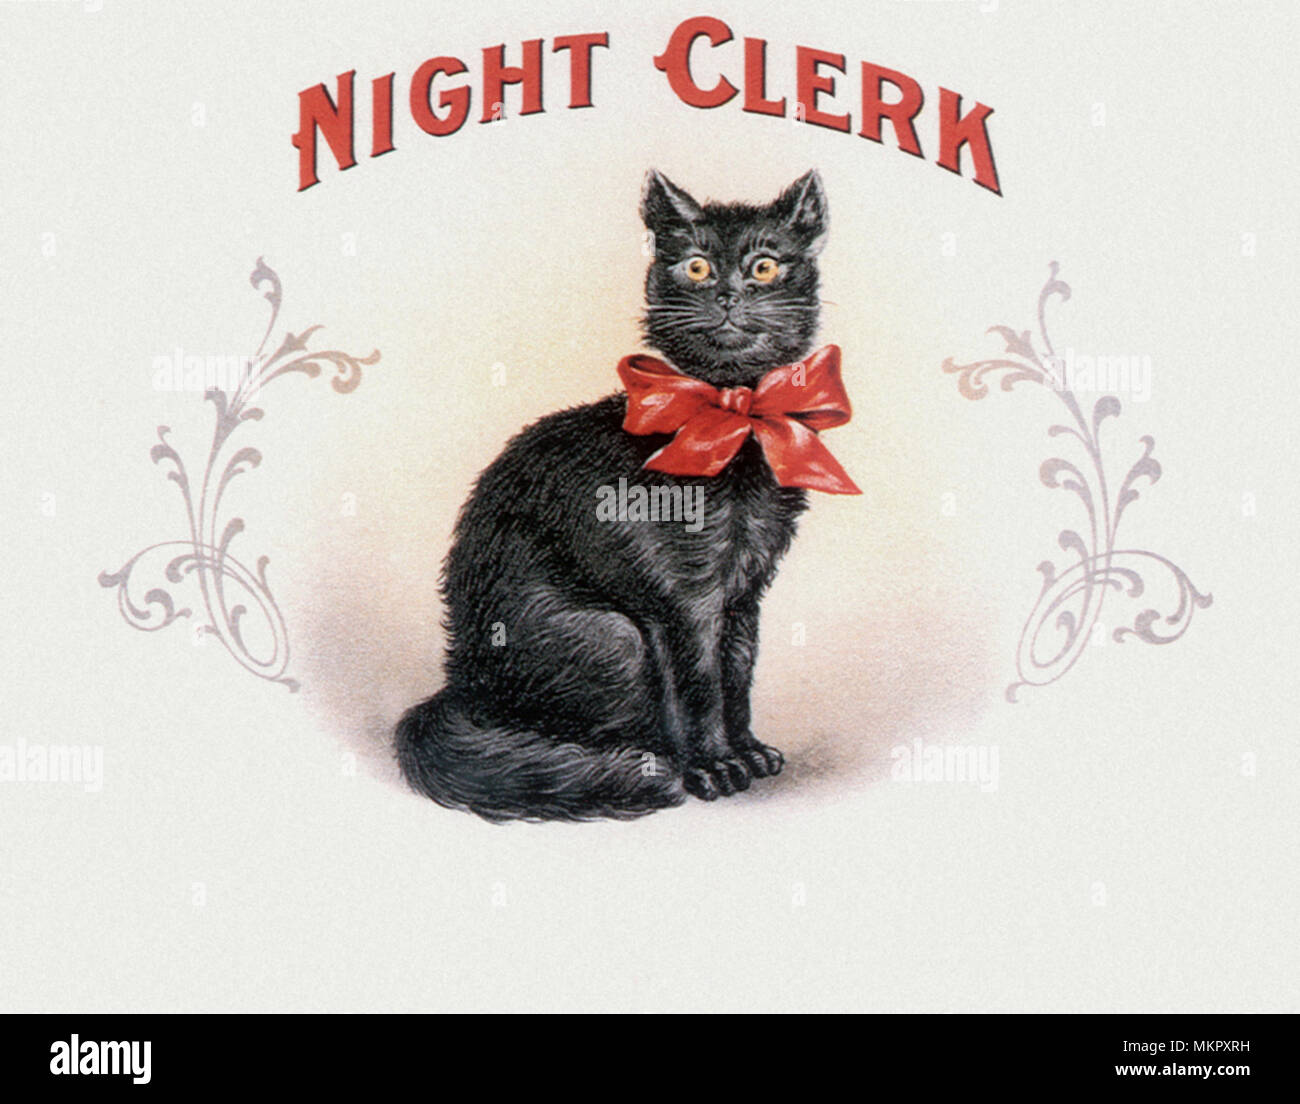 Night Clerk Cigar Label Stock Photo